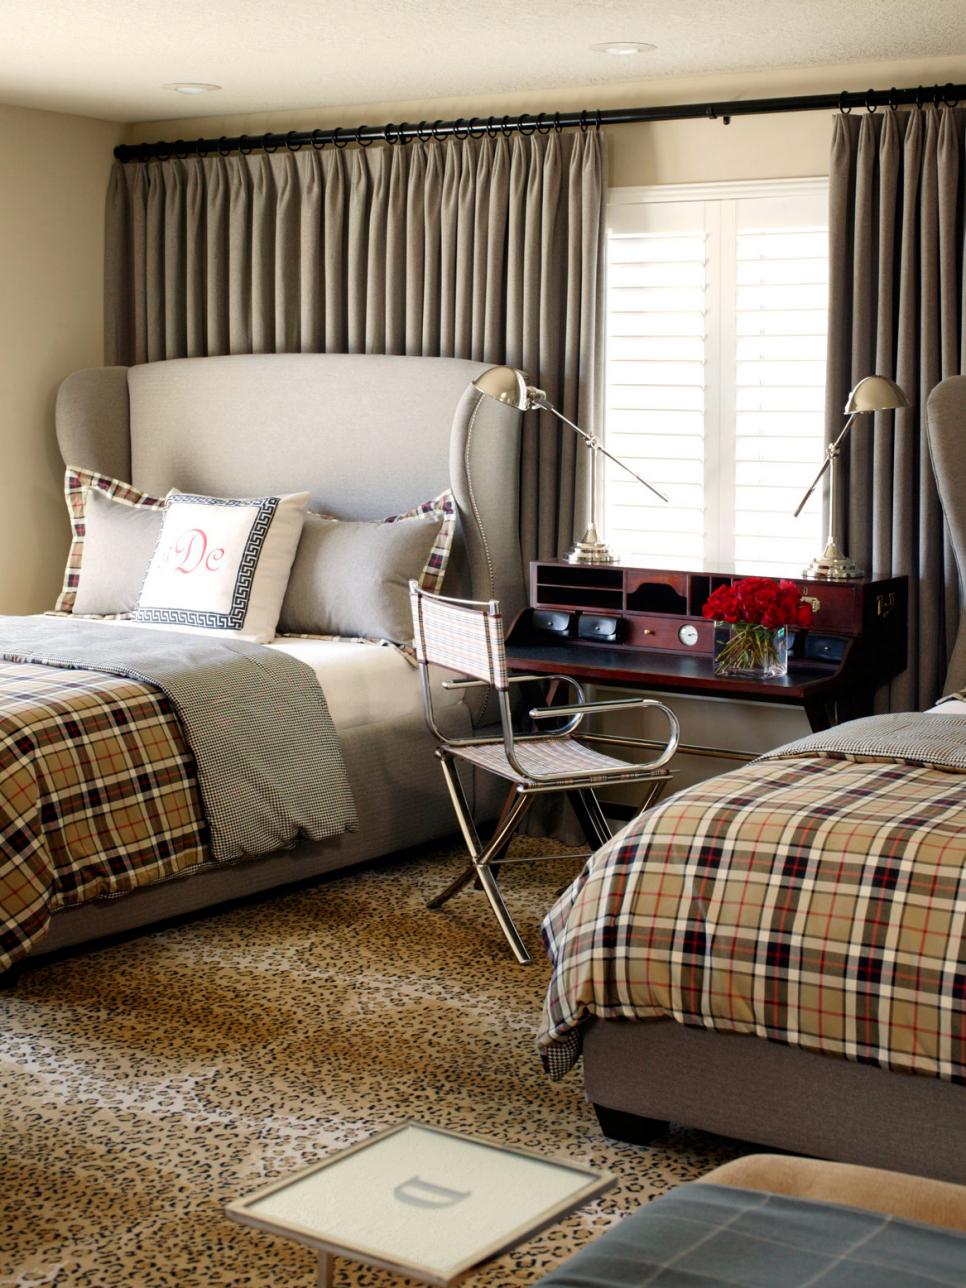 Dreamy Bedroom Window Treatment Ideas | HGTV